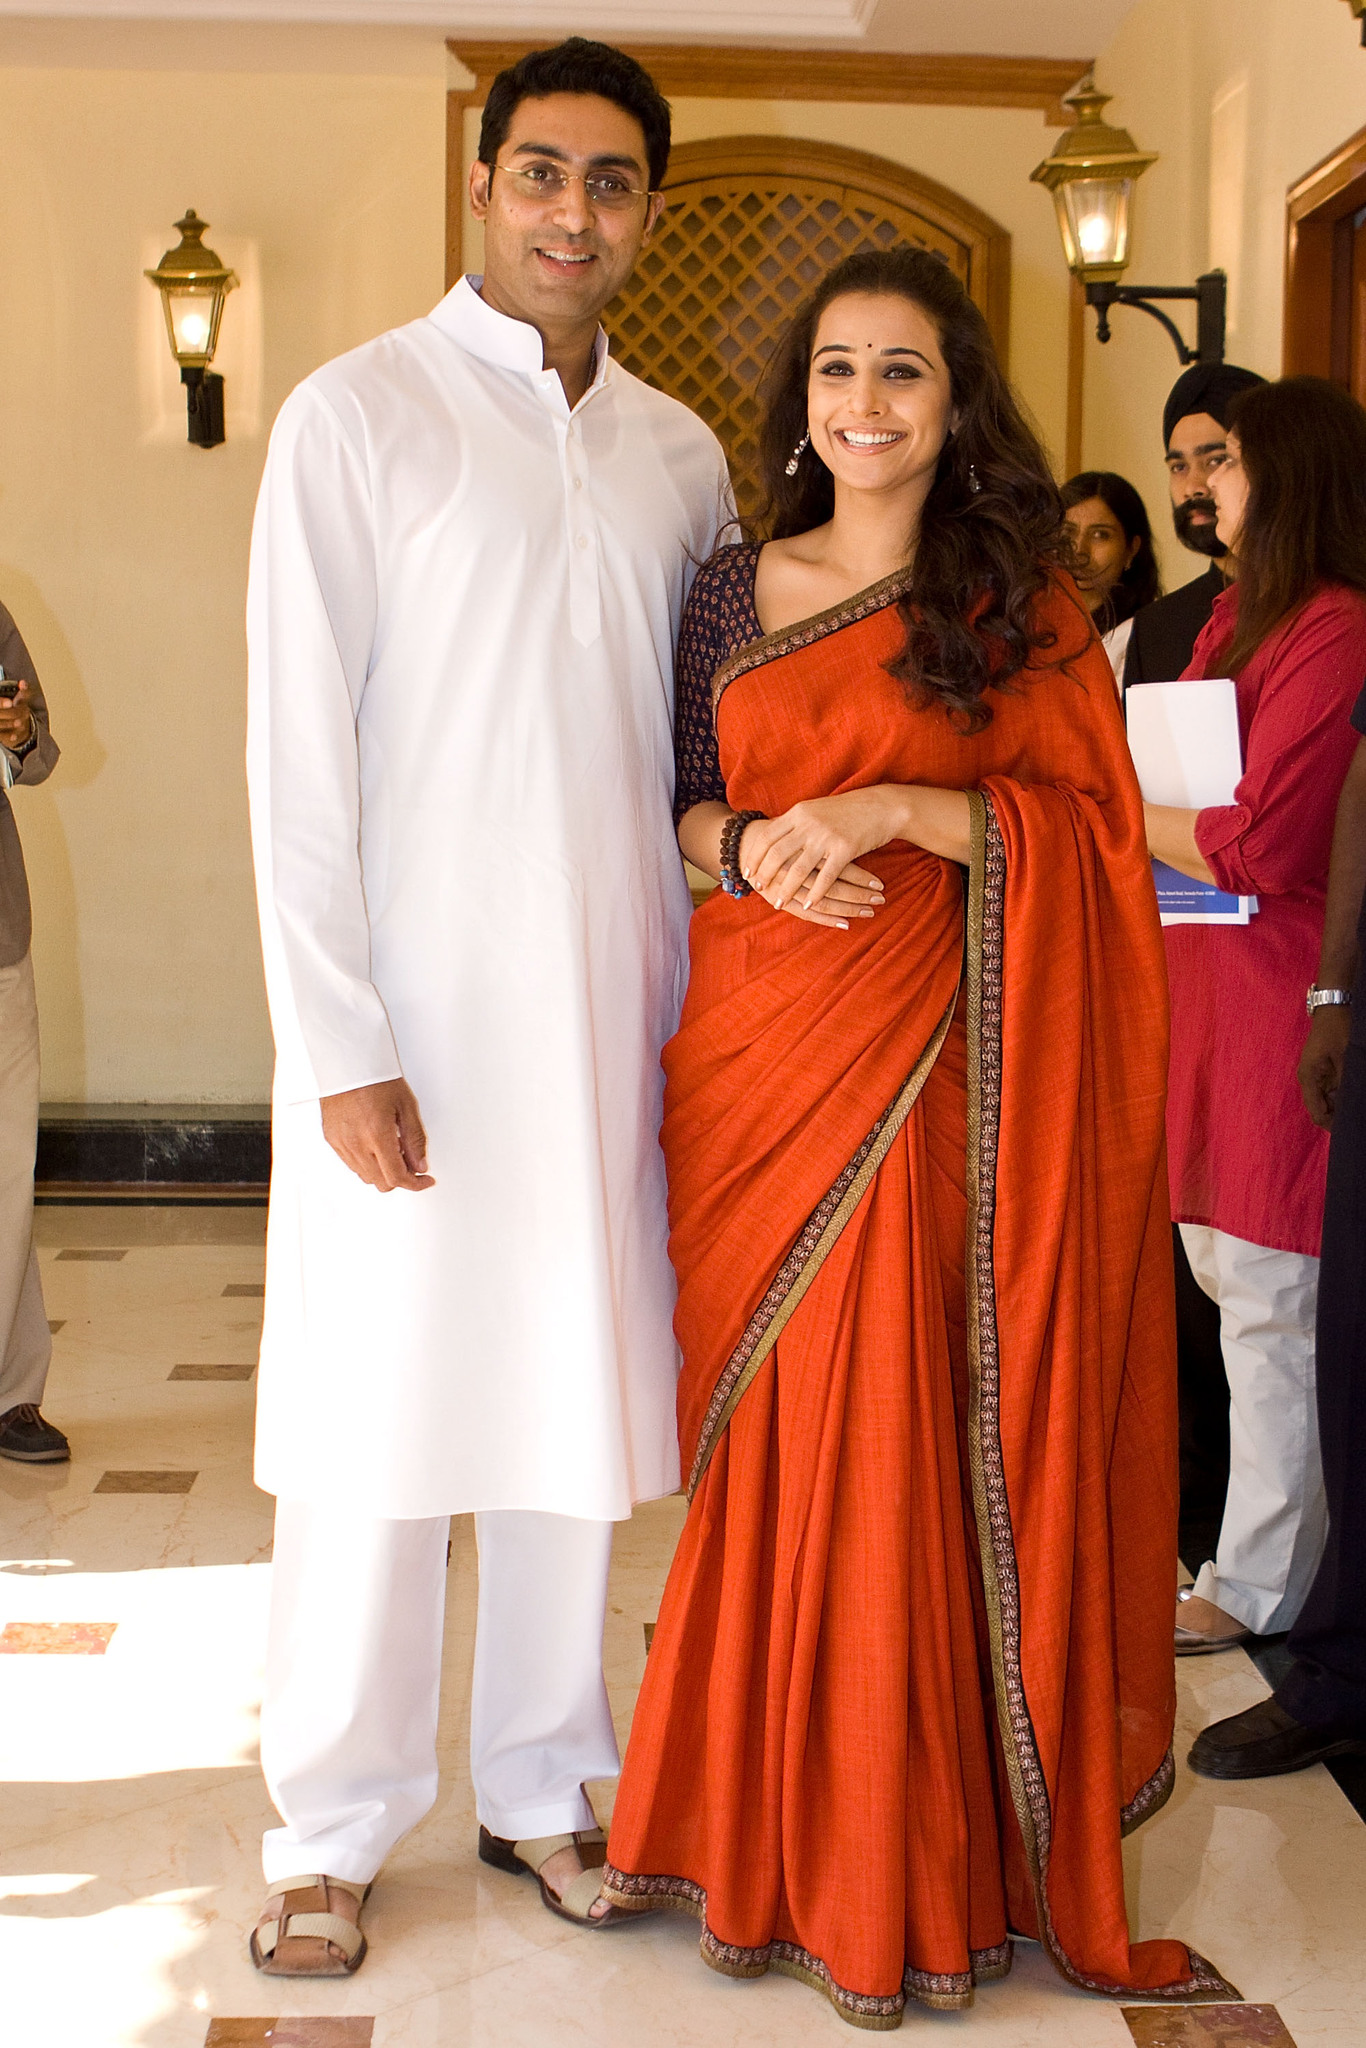 Abhishek Bachchan and Vidya Balan